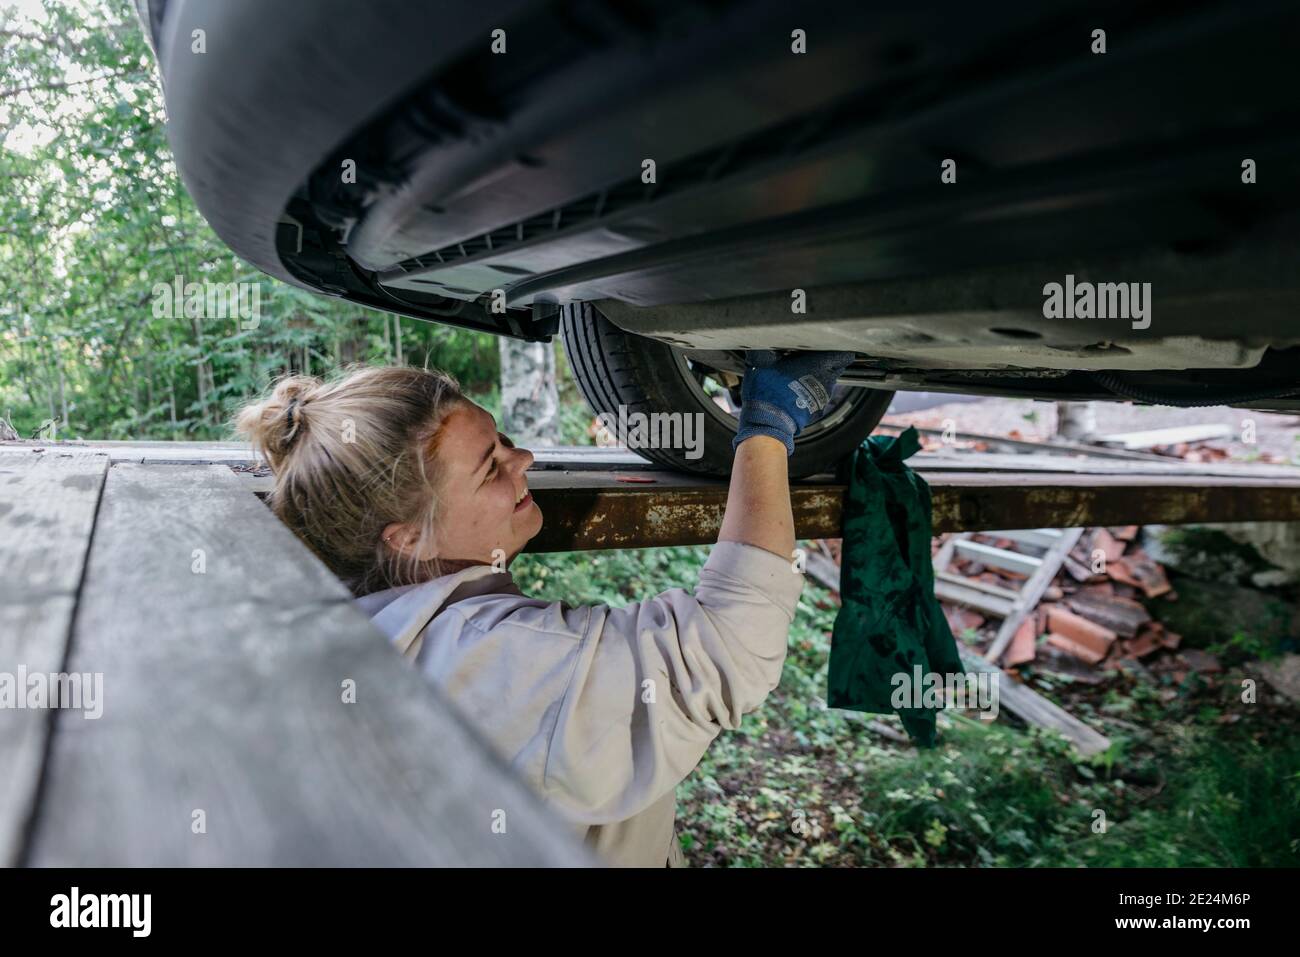 Woman repairing car Stock Photo